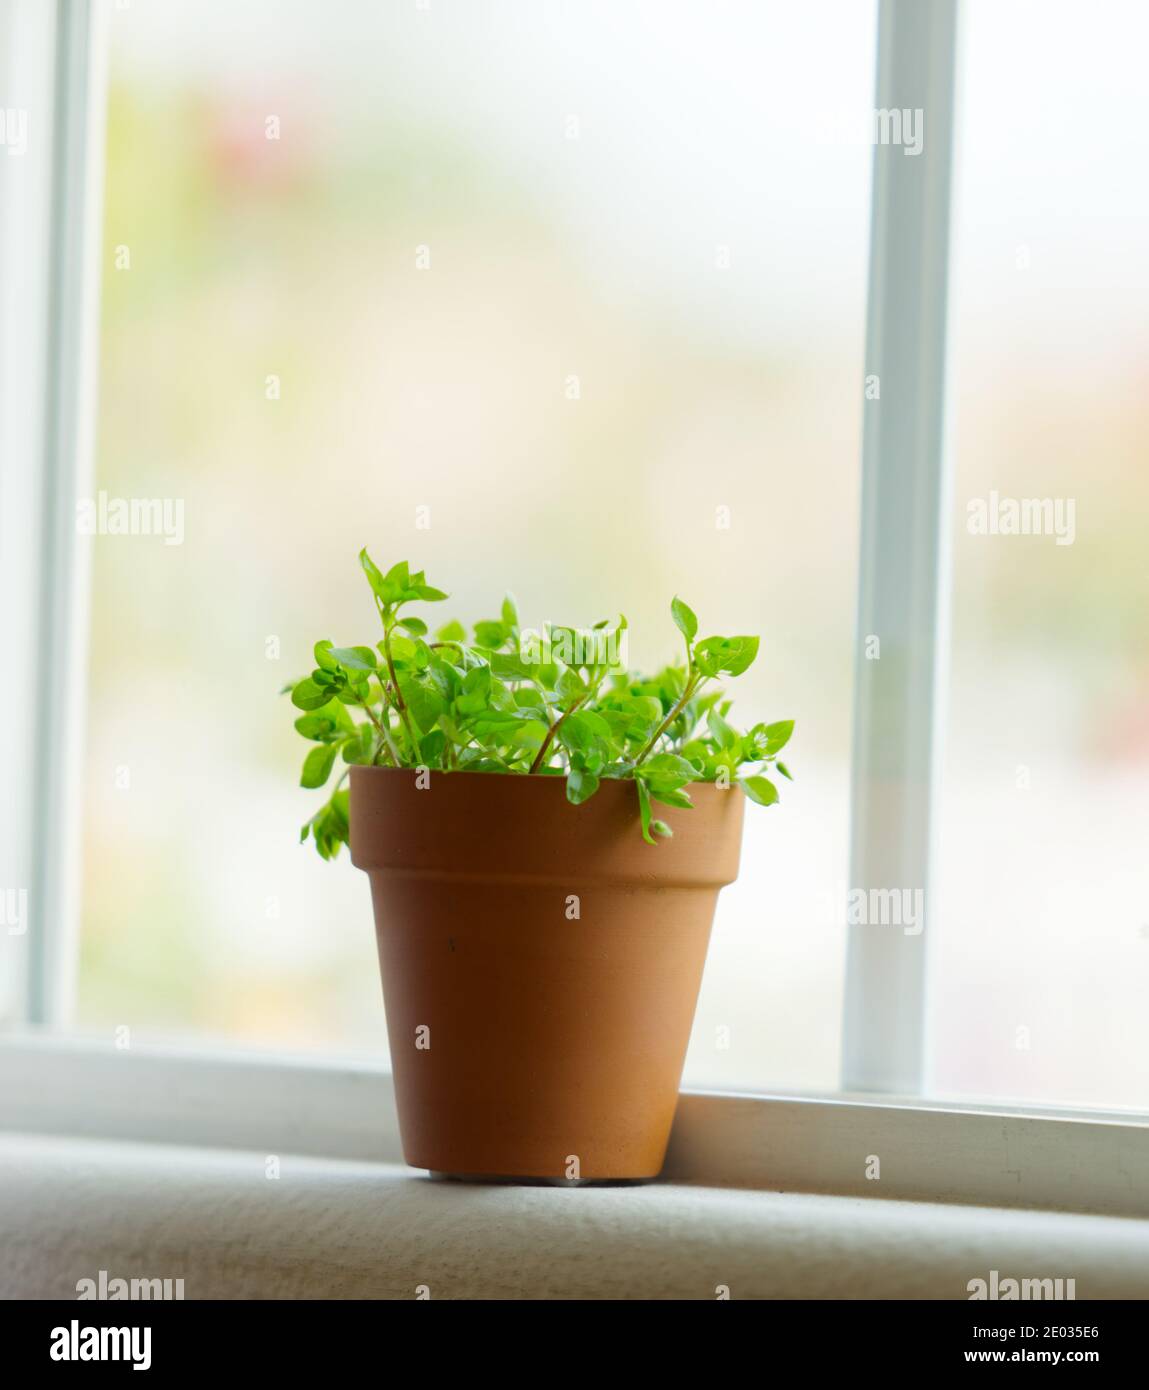 Baby sun rose on windowsill, interior green palnt, blurred background Stock Photo